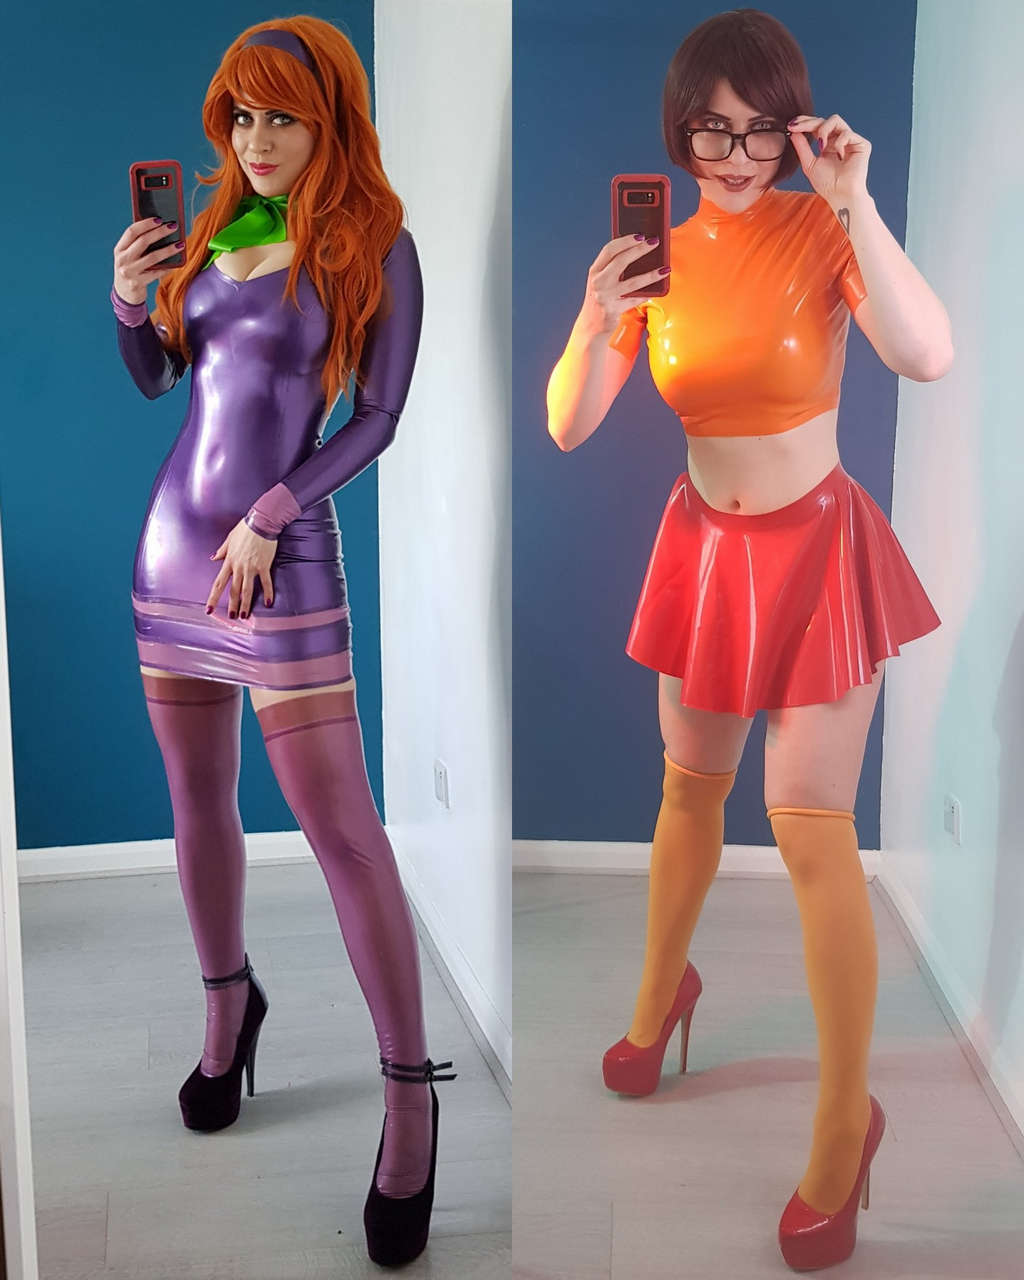 Purplemuffinz As Daphne And Velma Scooby Doo 0